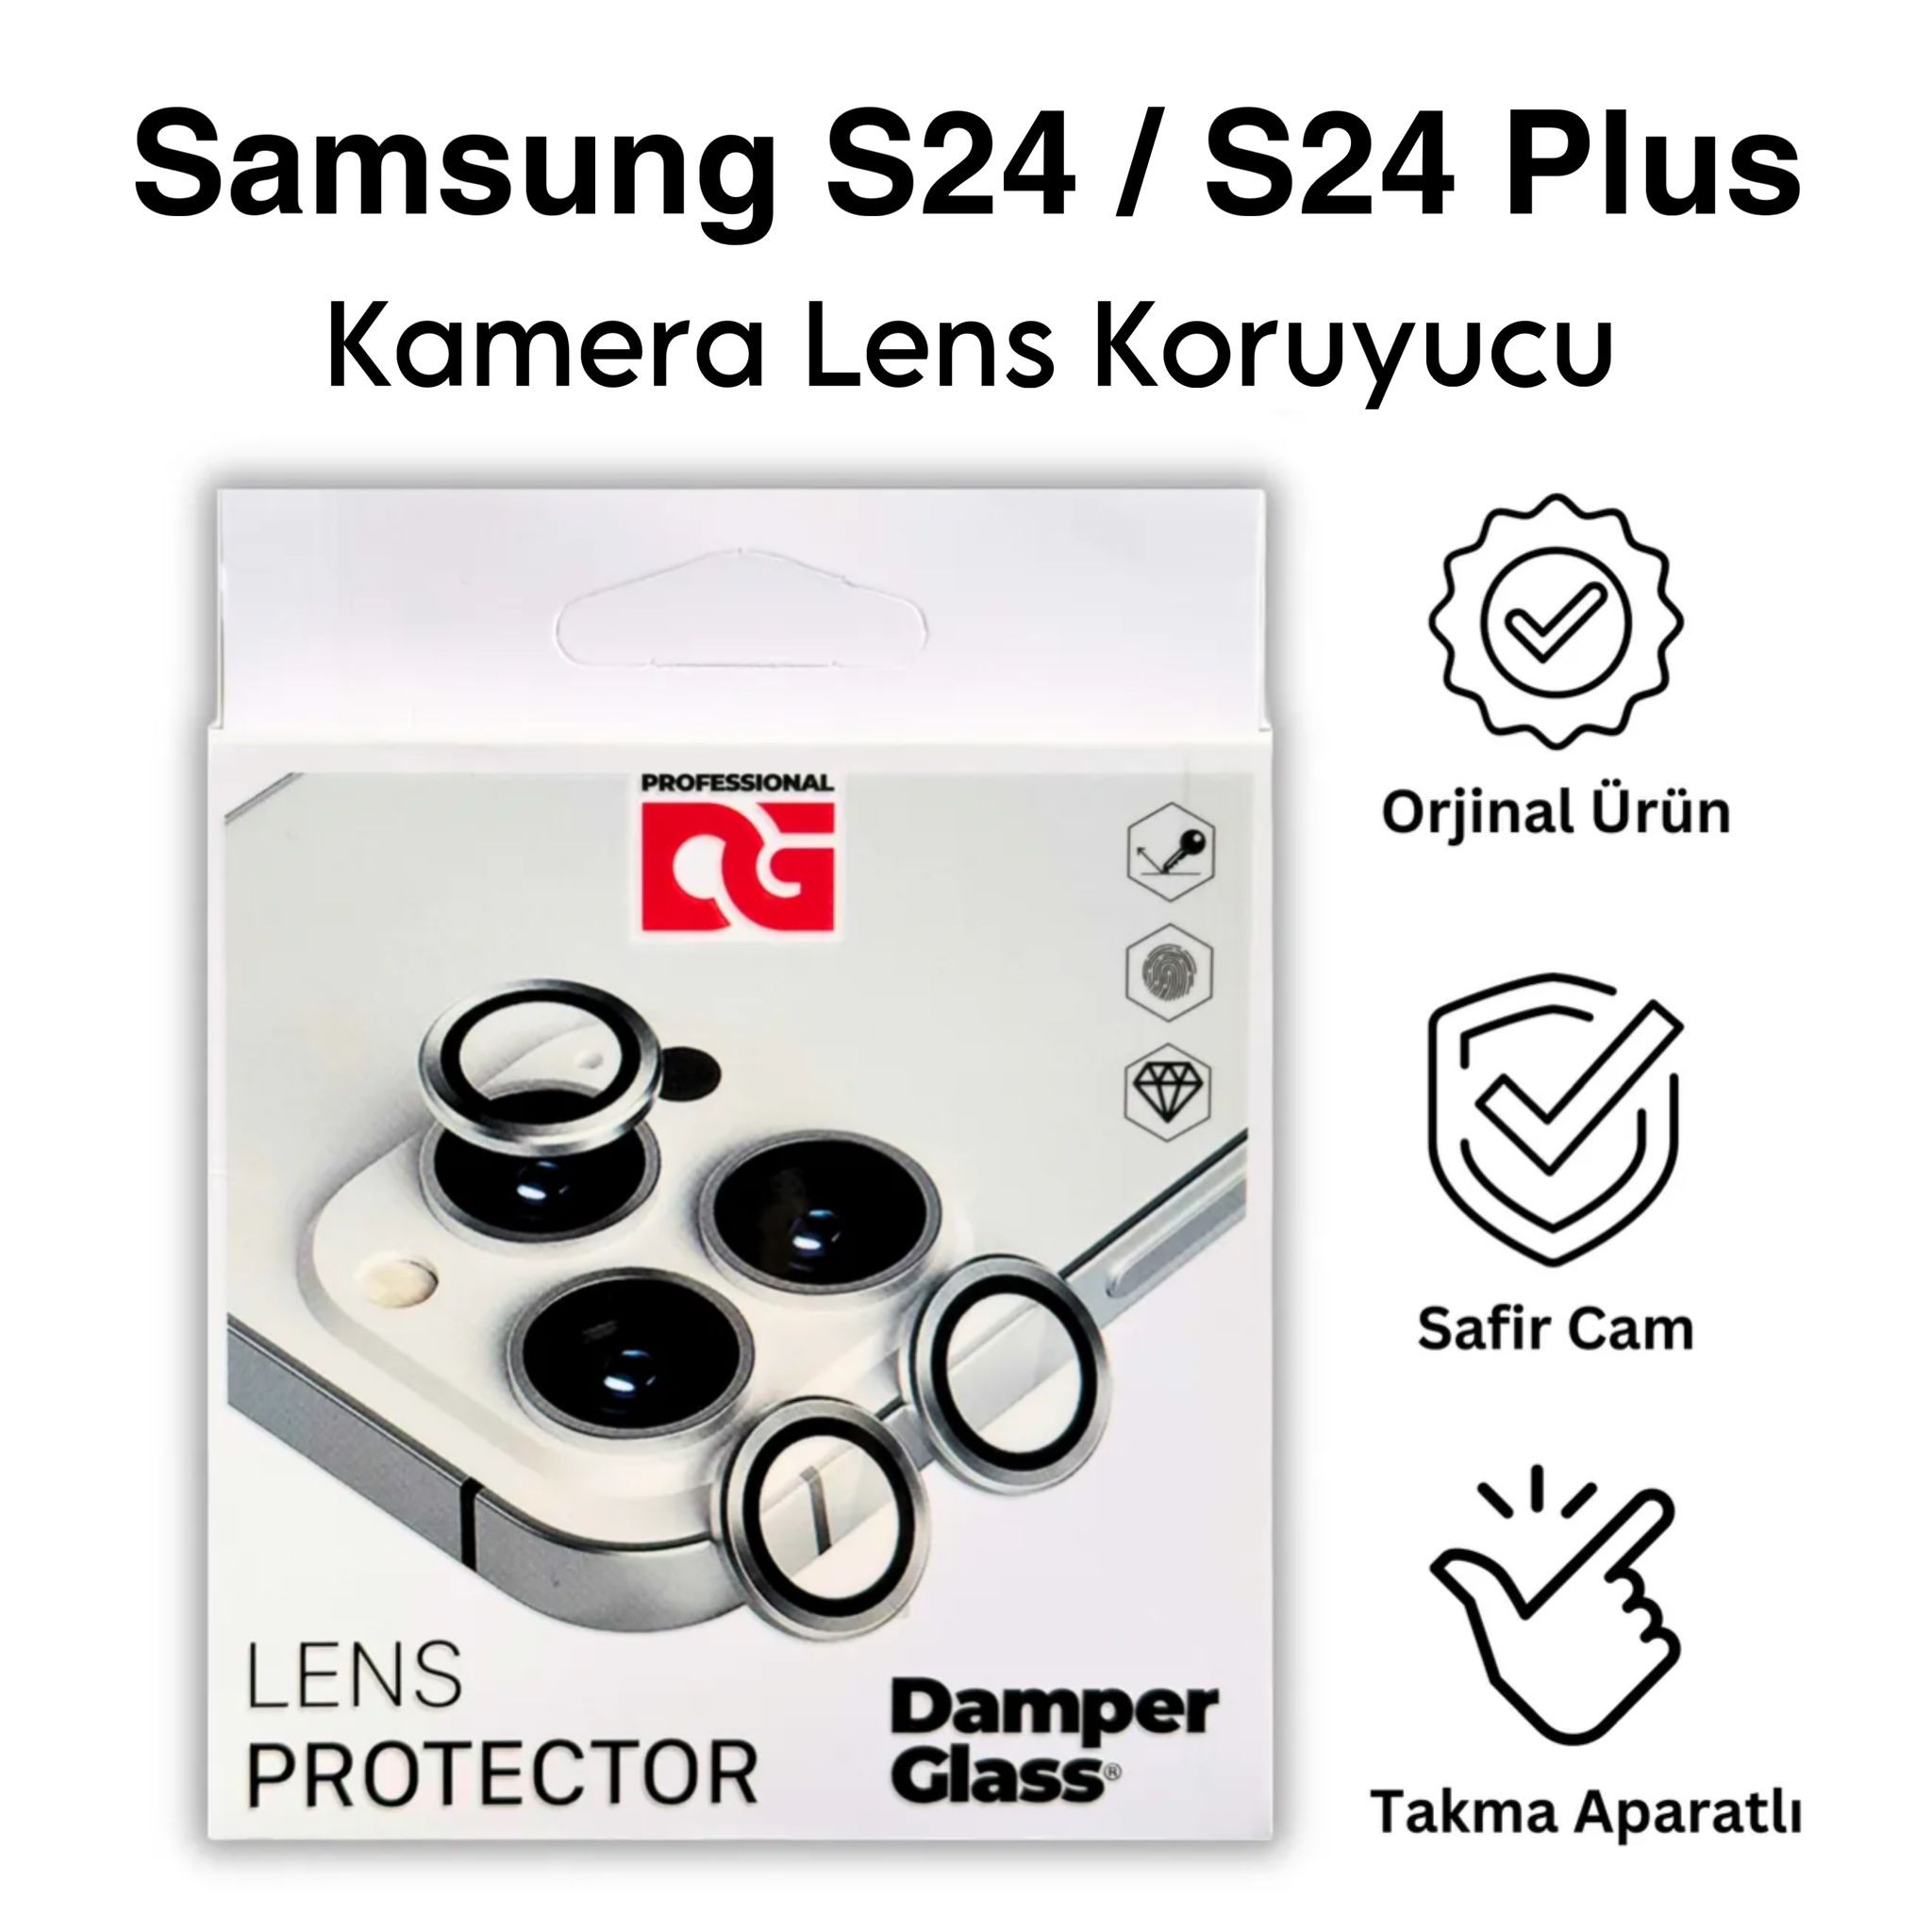 DamperGlass Premium Safir Lens Koruyucu for Samsung S24 / S24 Plus